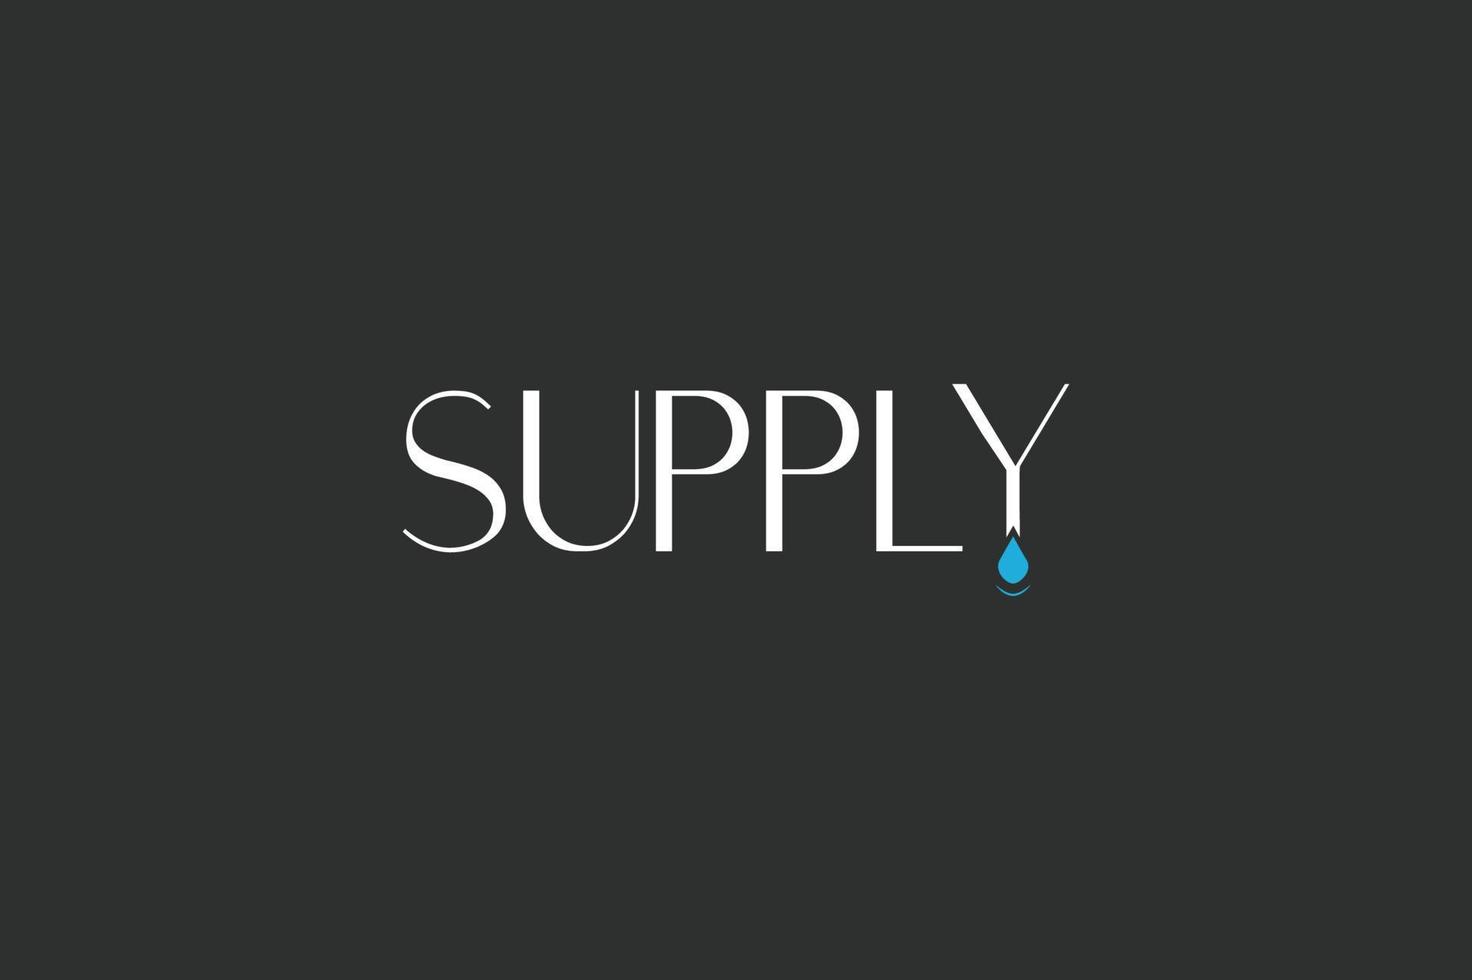 supply logo wordmark, logo design vector